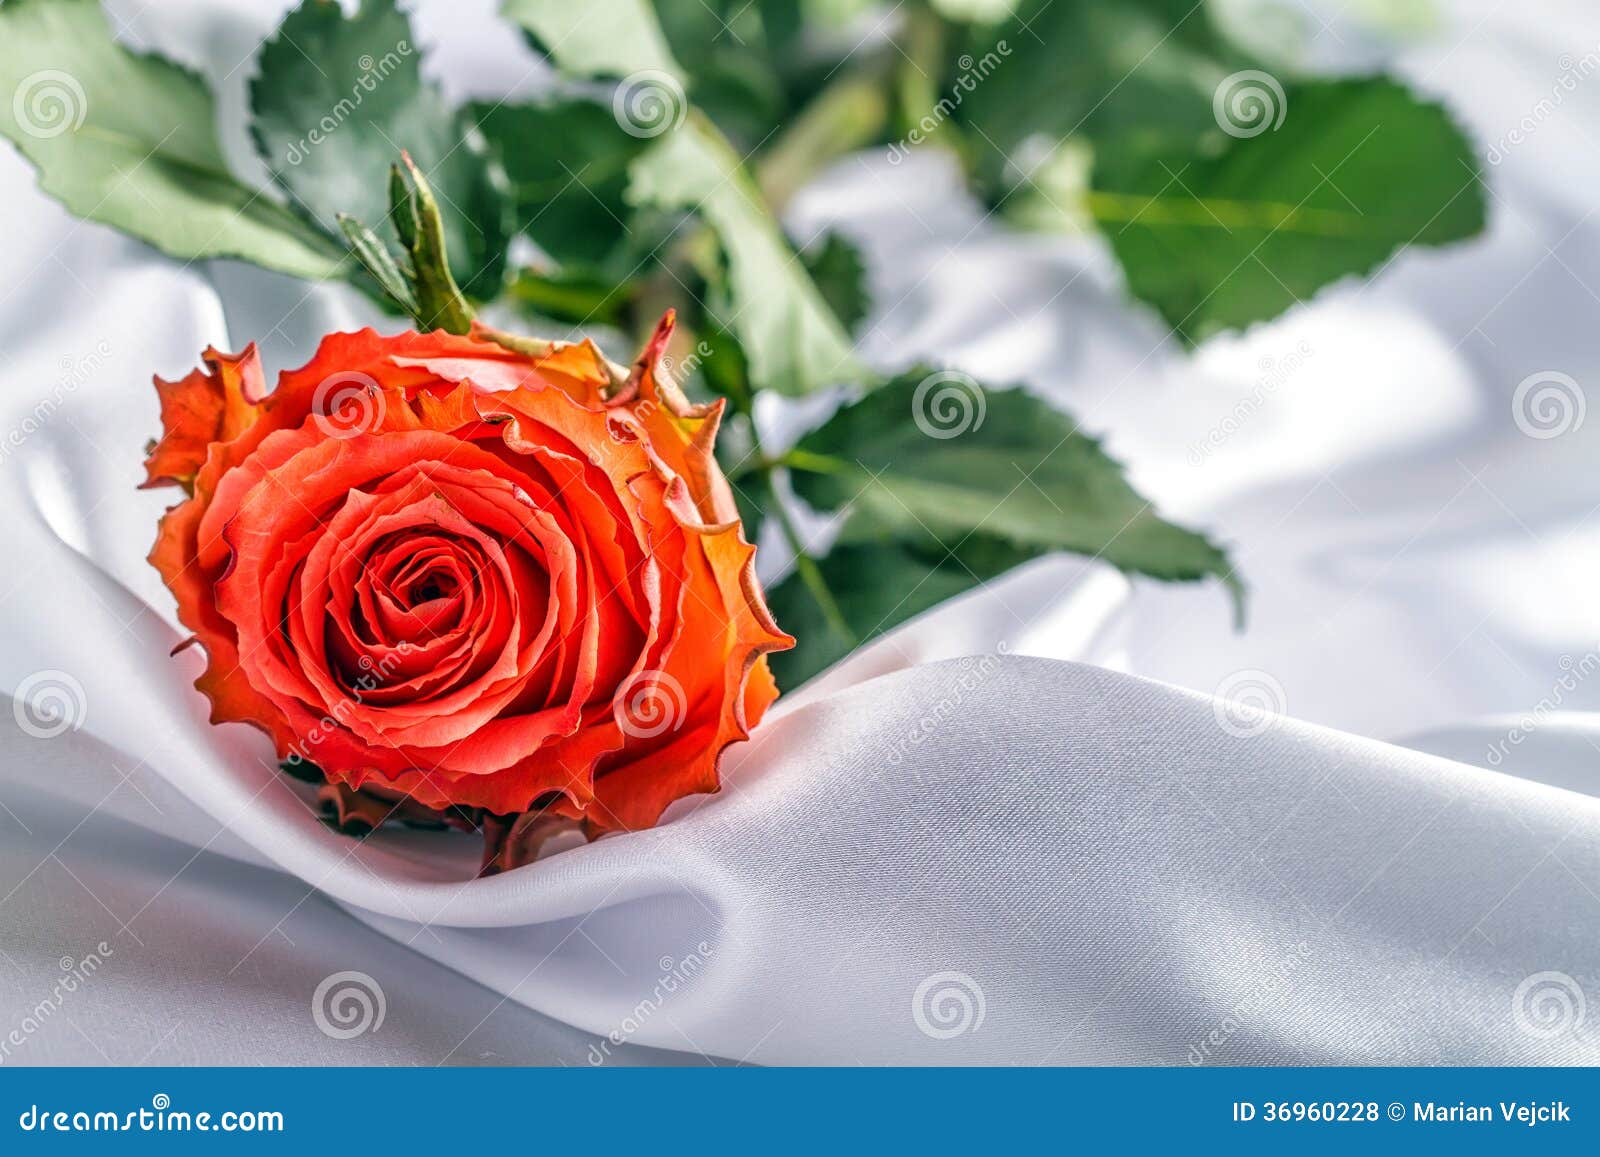 Rose on white satin. stock photo. Image of design, birthday - 36960228